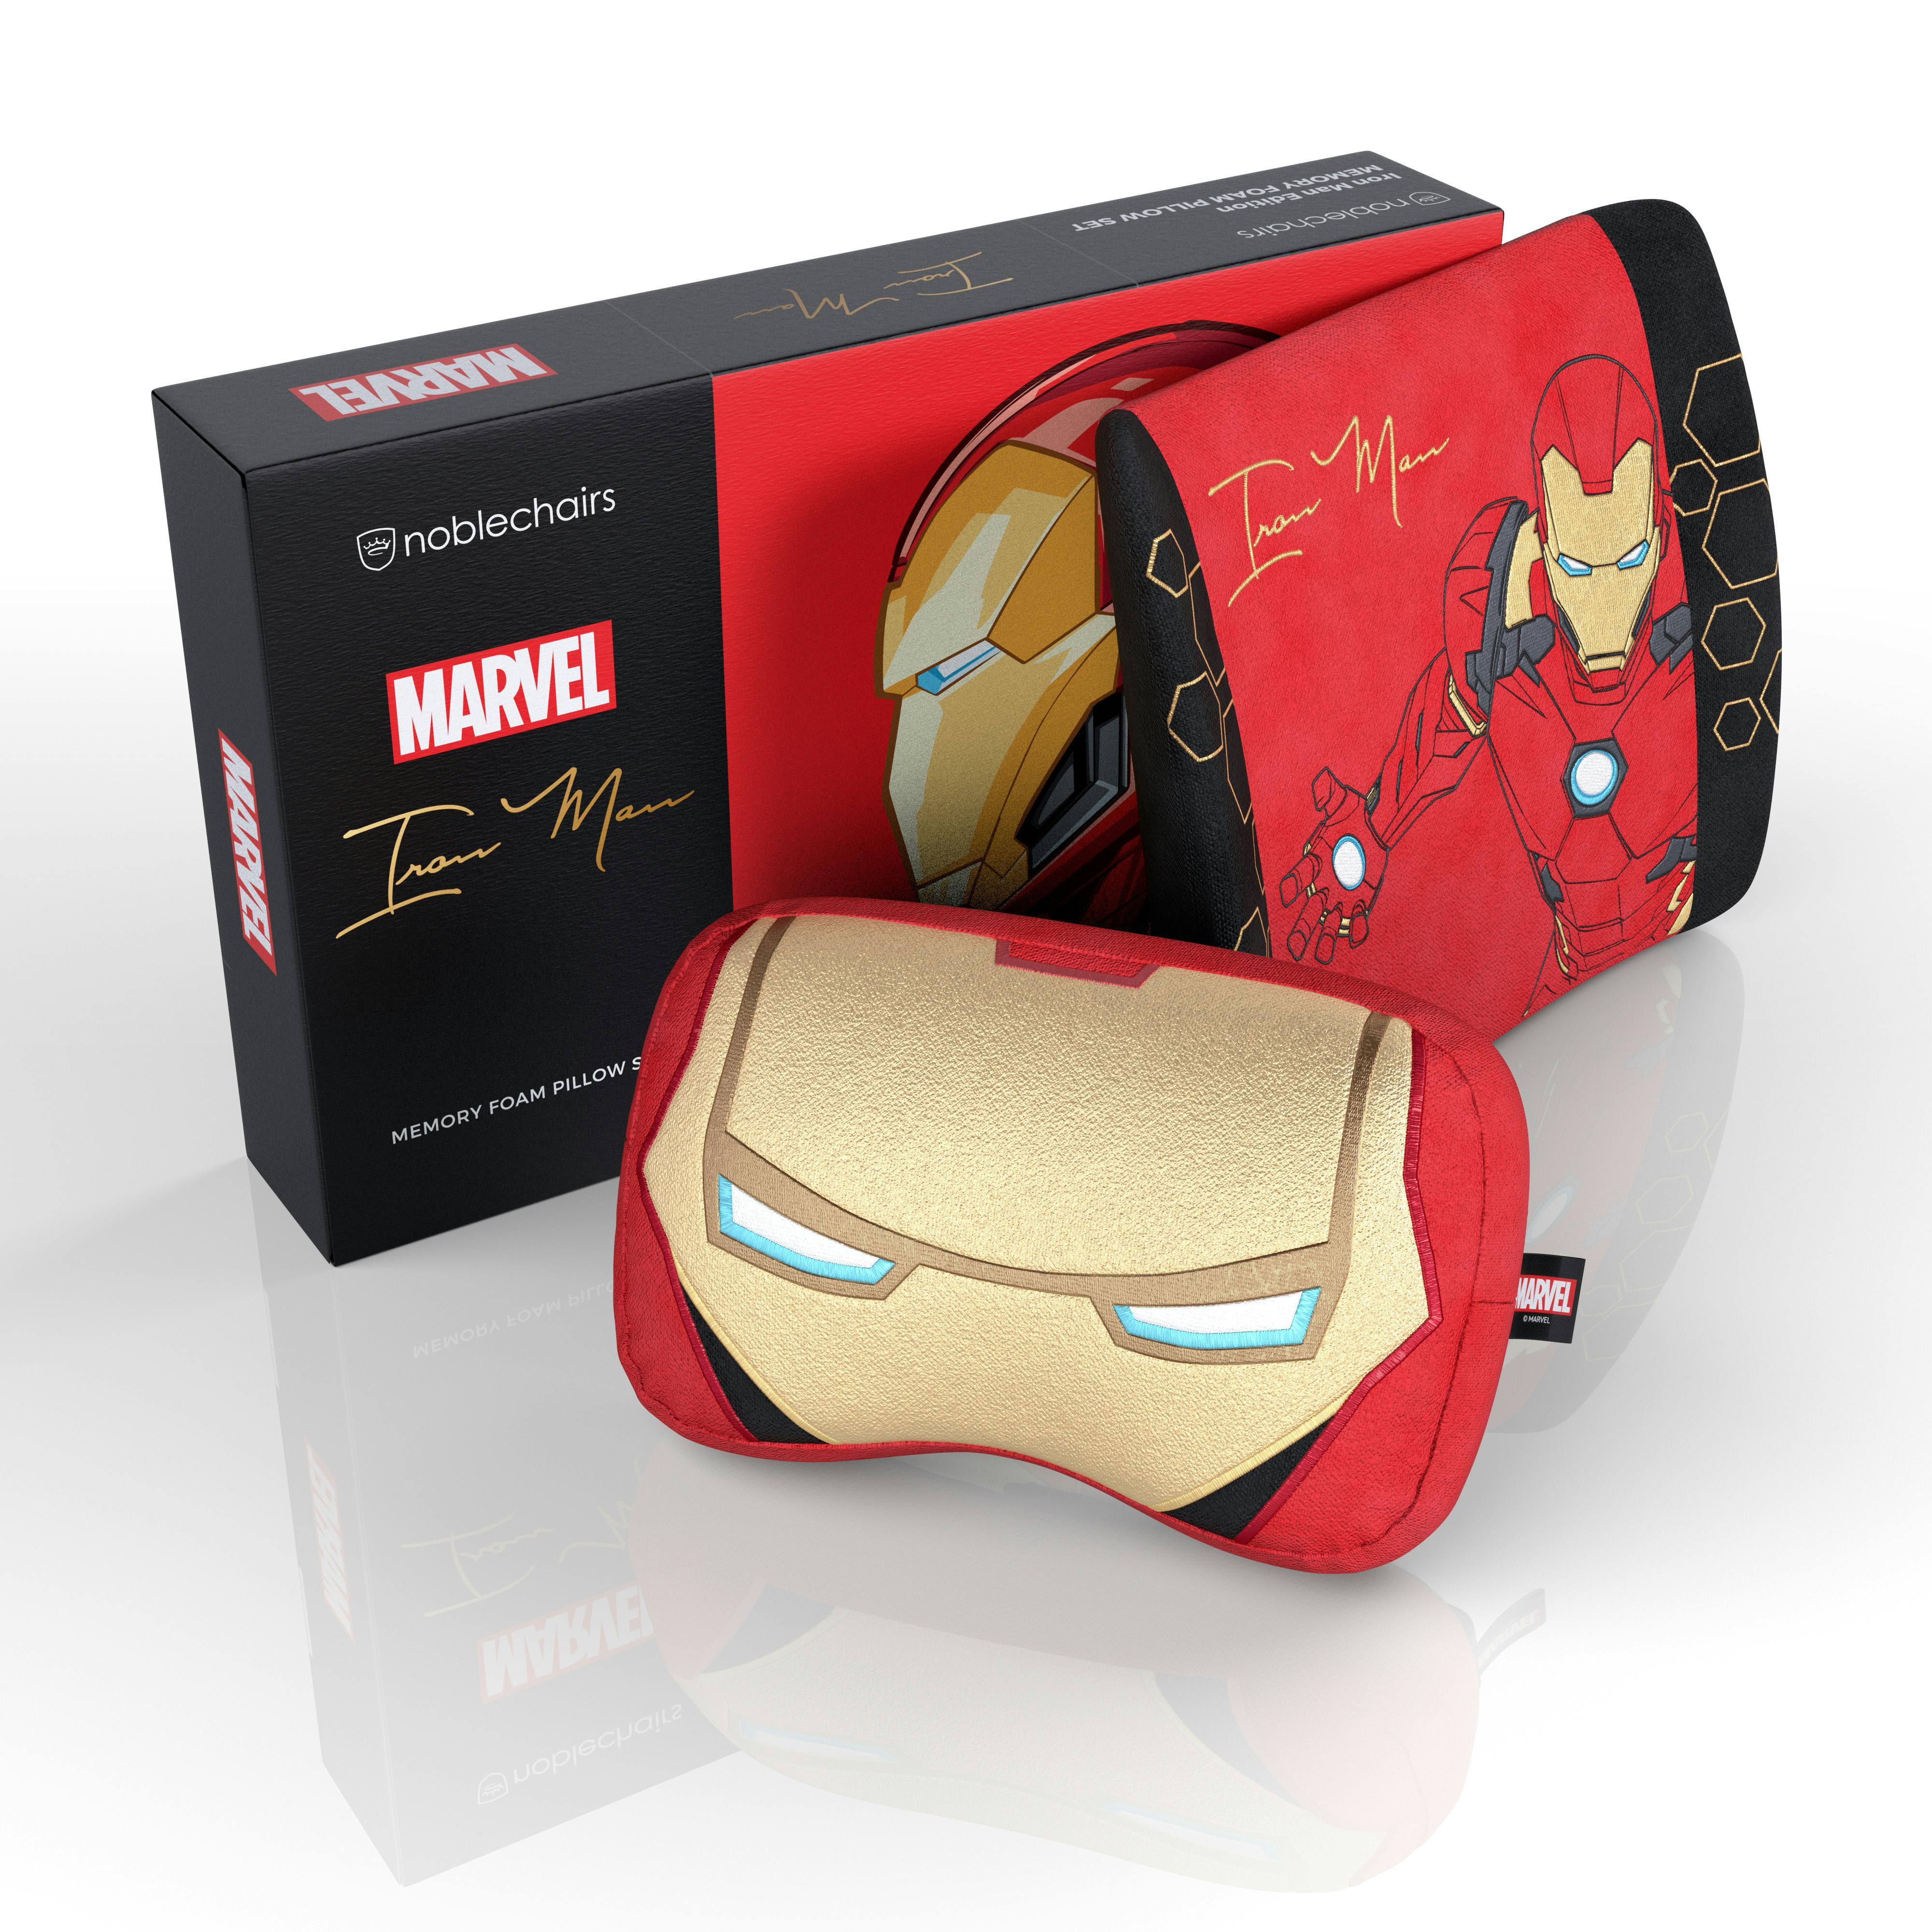  - Cojín de espuma de memoria Set de almohadas de la edición Iron Man